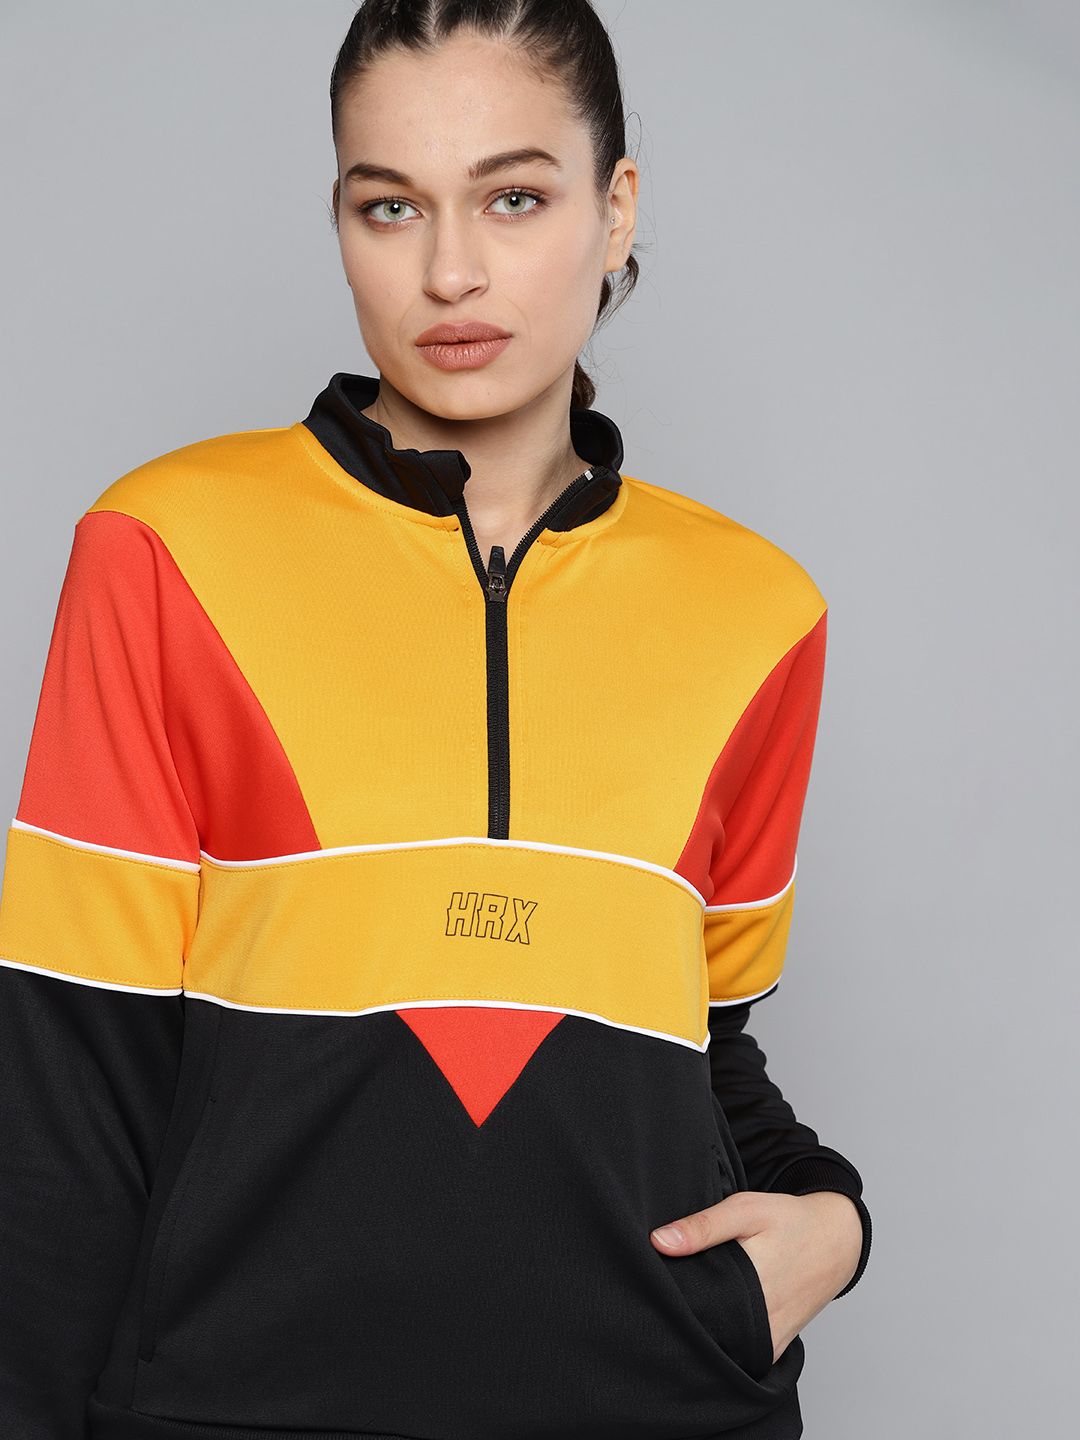 HRX by Hrithik Roshan Women Black & Yellow Colourblocked Sweatshirt Price in India